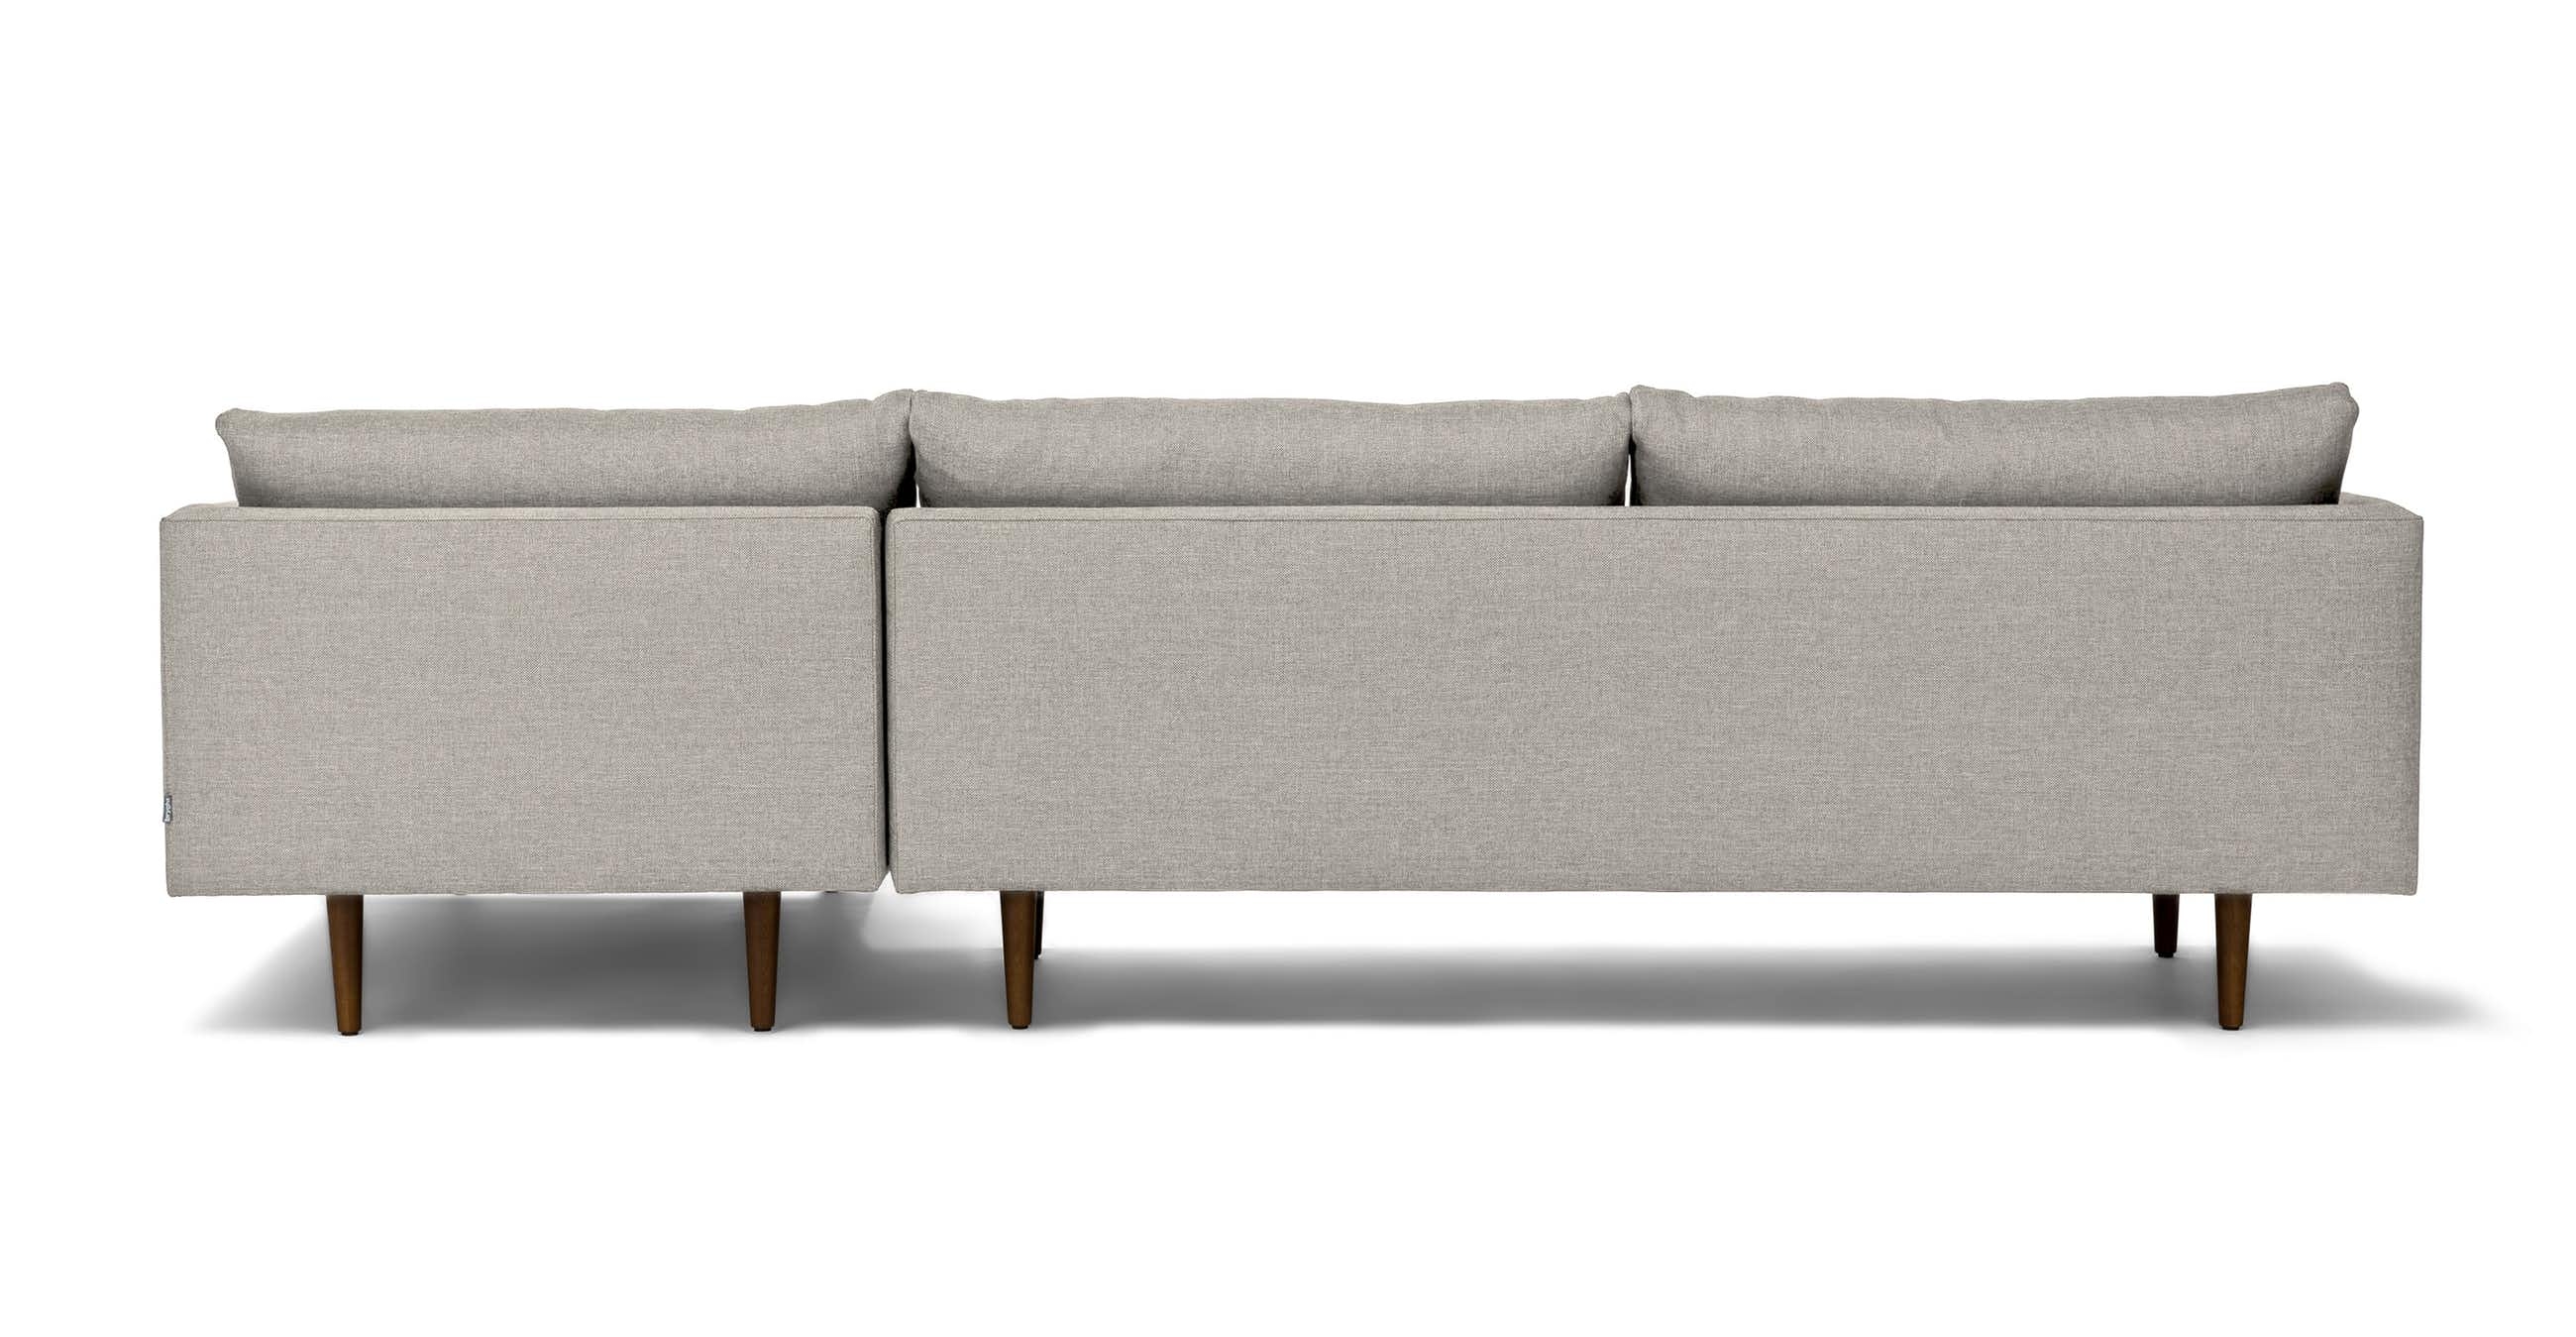 Burrard Seasalt Gray Right Sectional Sofa - Image 3